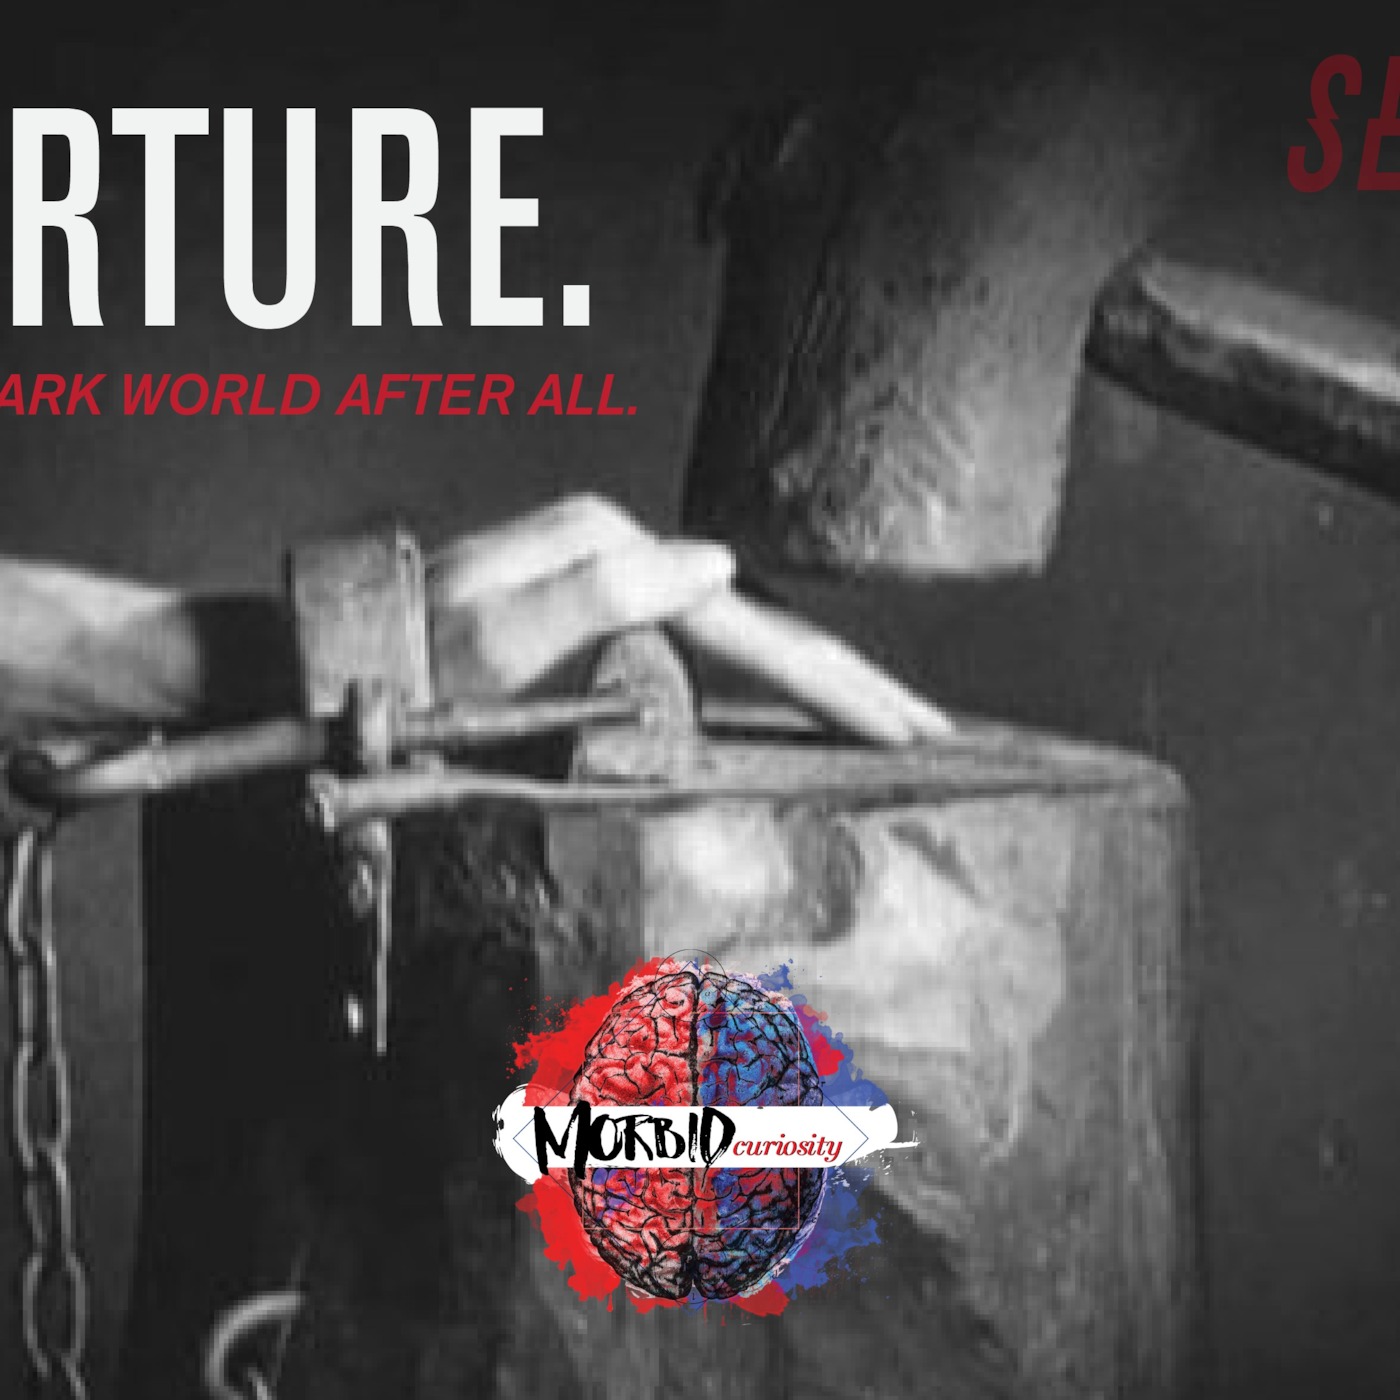 Torture: It's a Dark World After All.